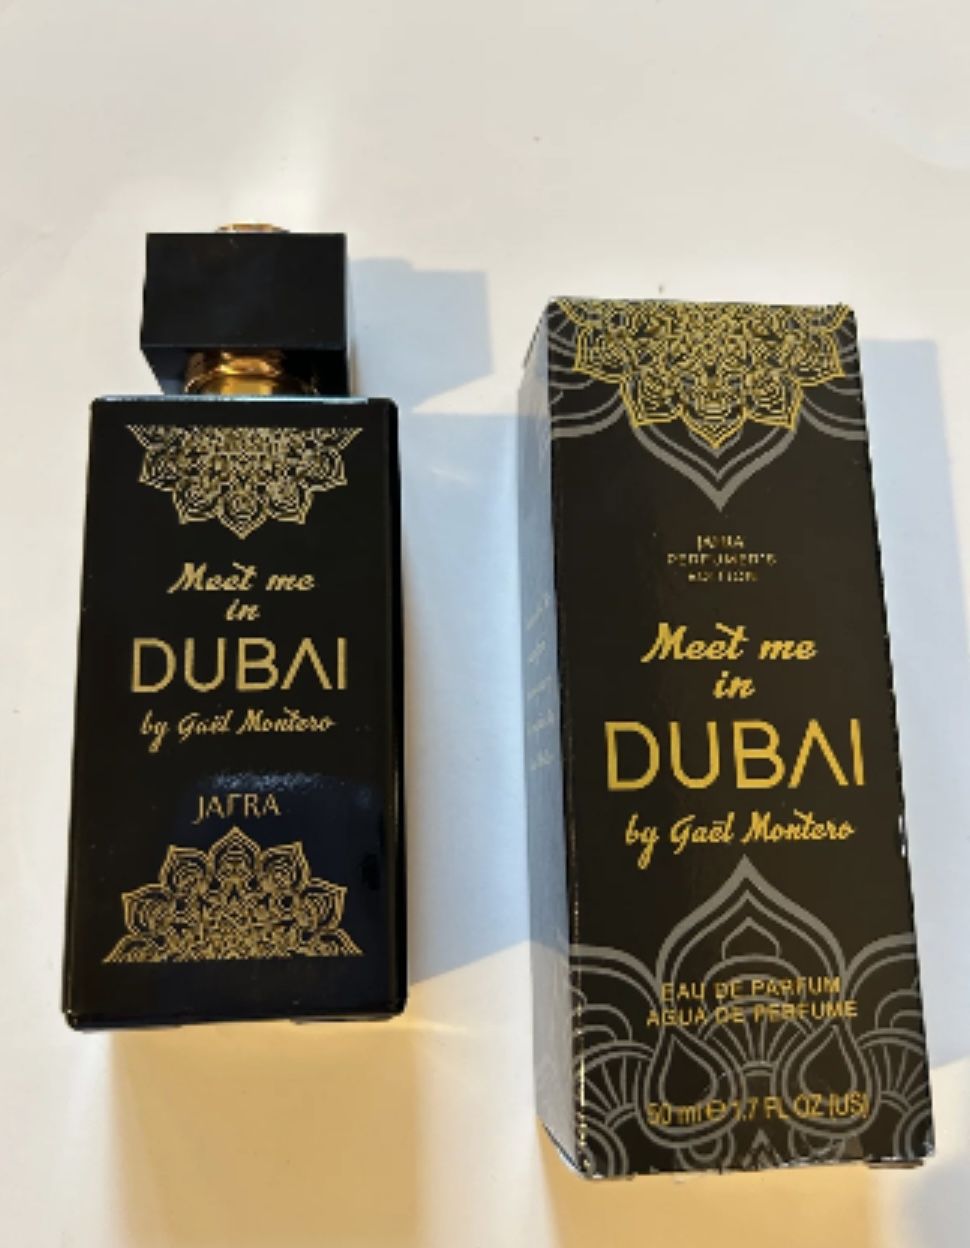 Dubai Perfume 